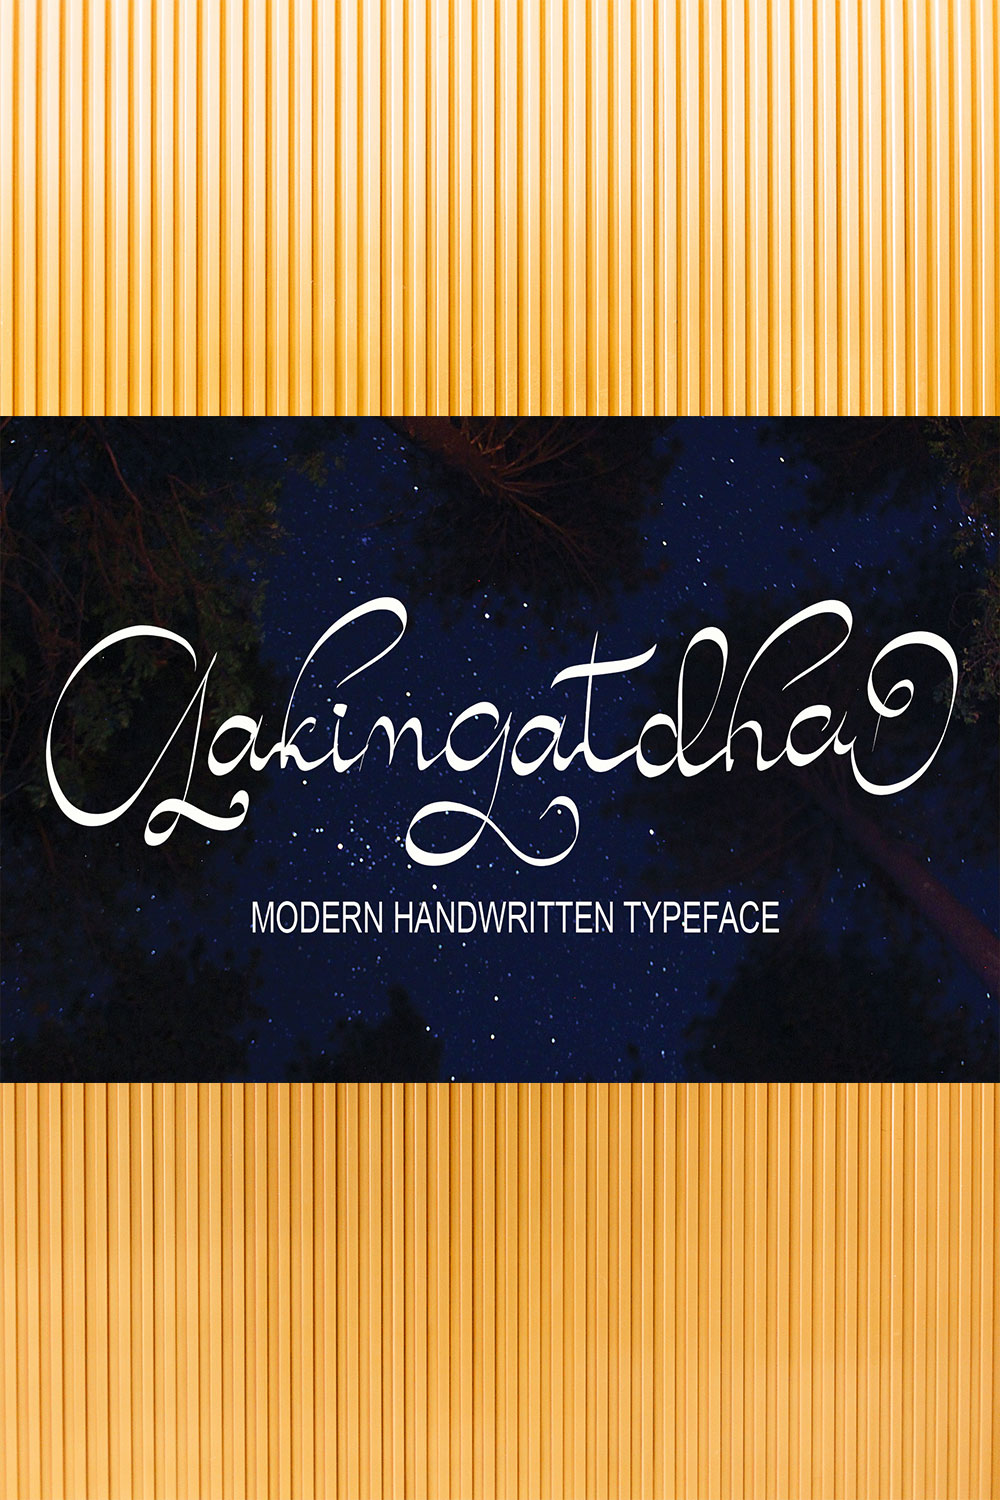 Font Script Signature Gakimgatdha Design pinterest image.